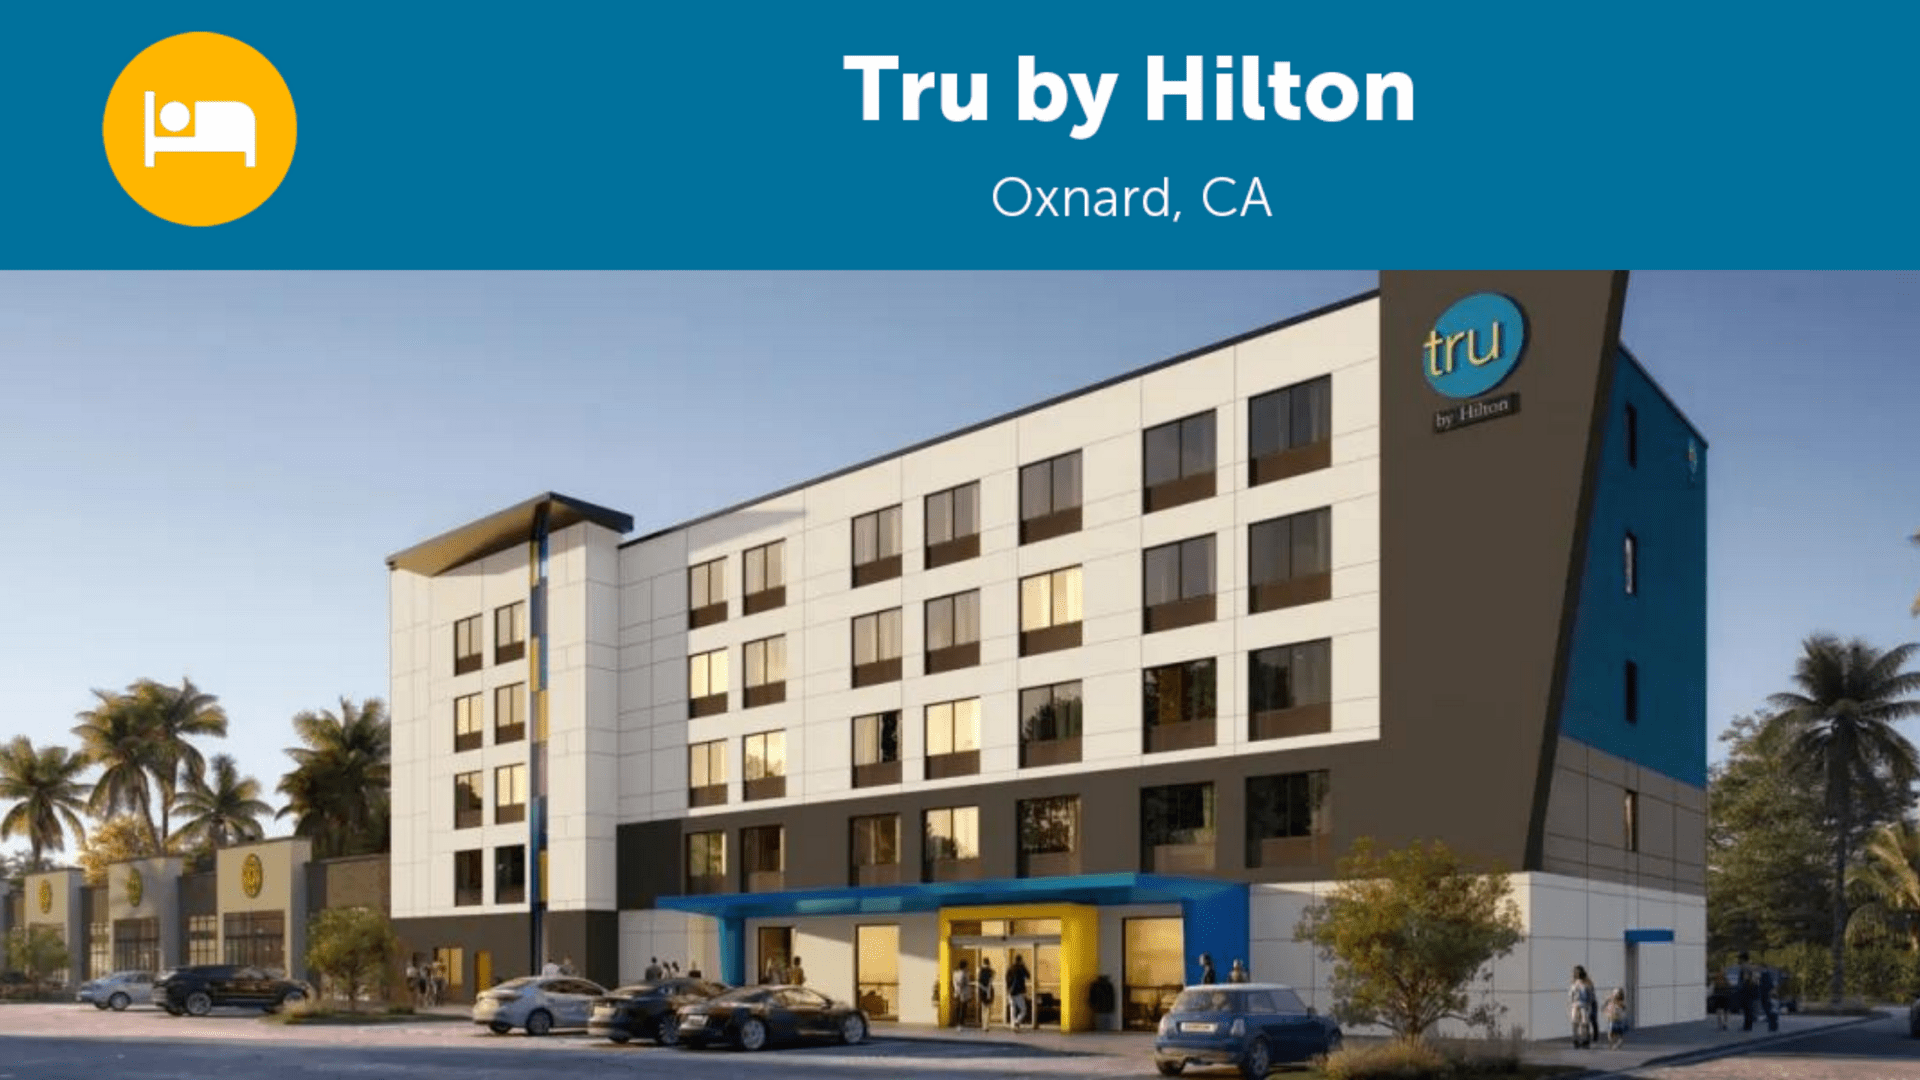 Tru by Hilton in Oxnard, CA